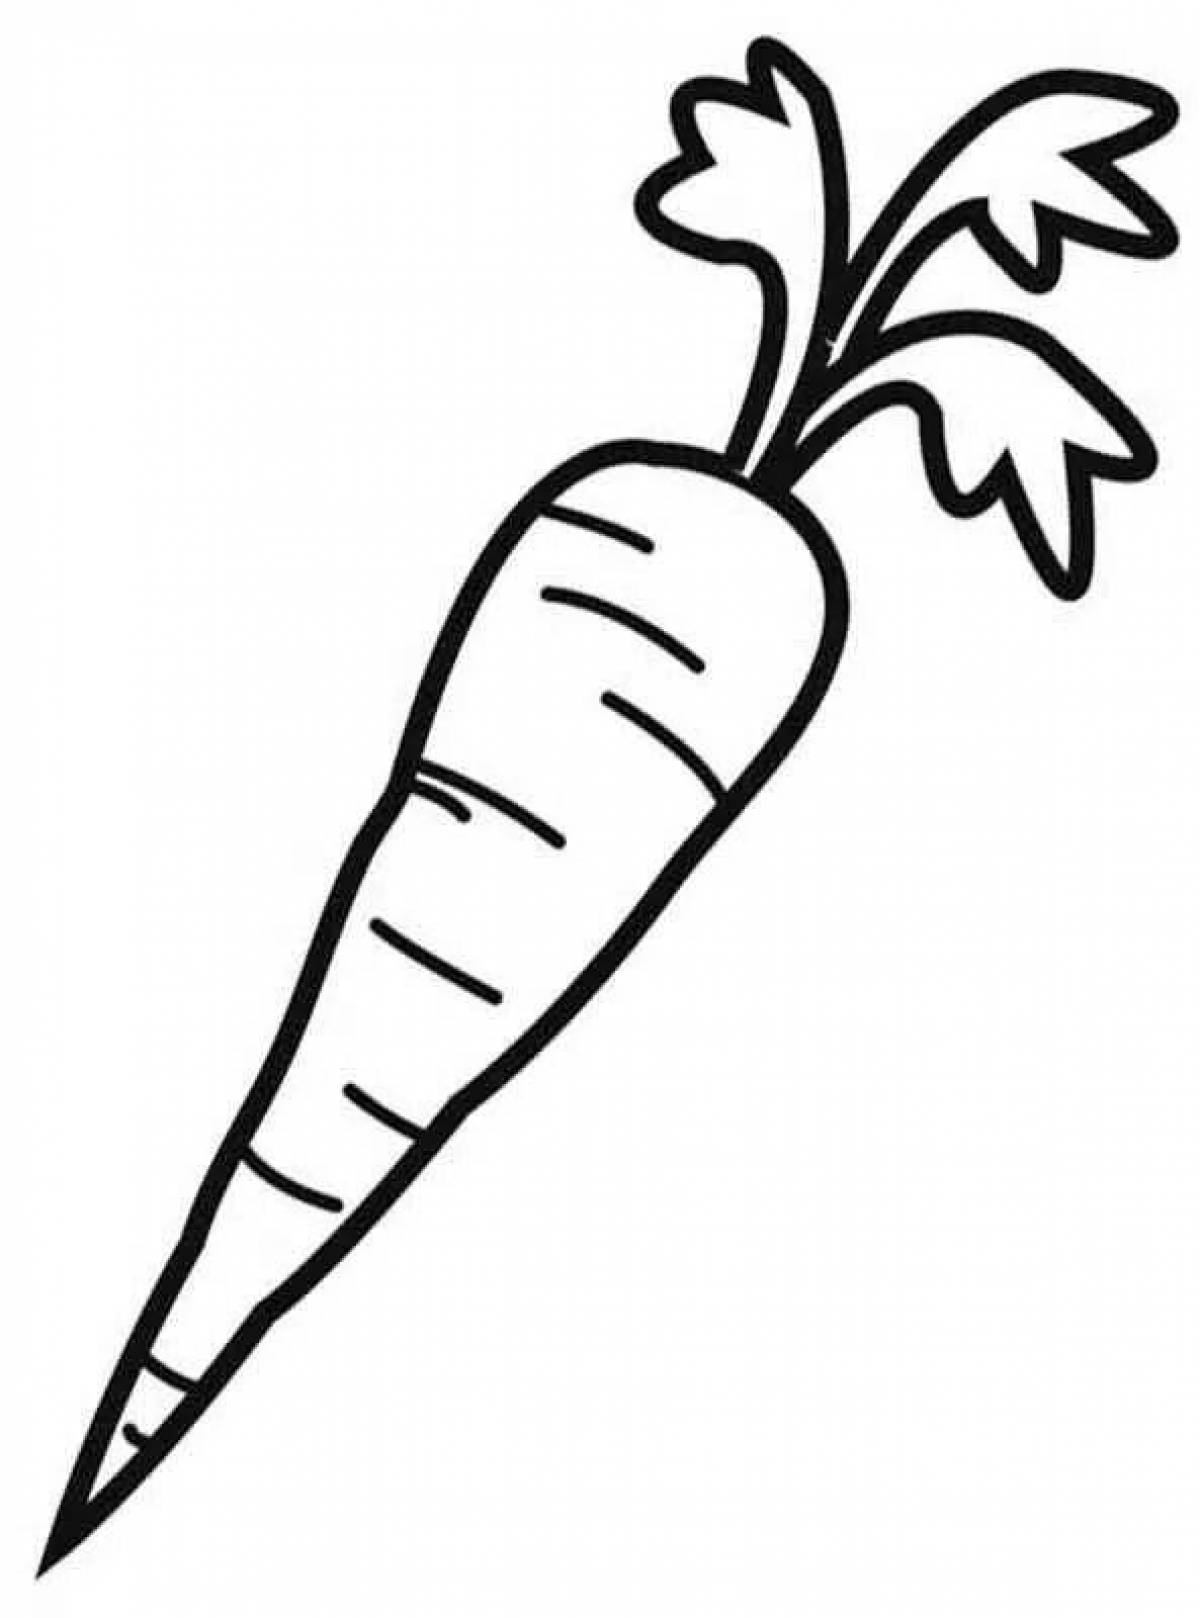 Adorable carrot illustration